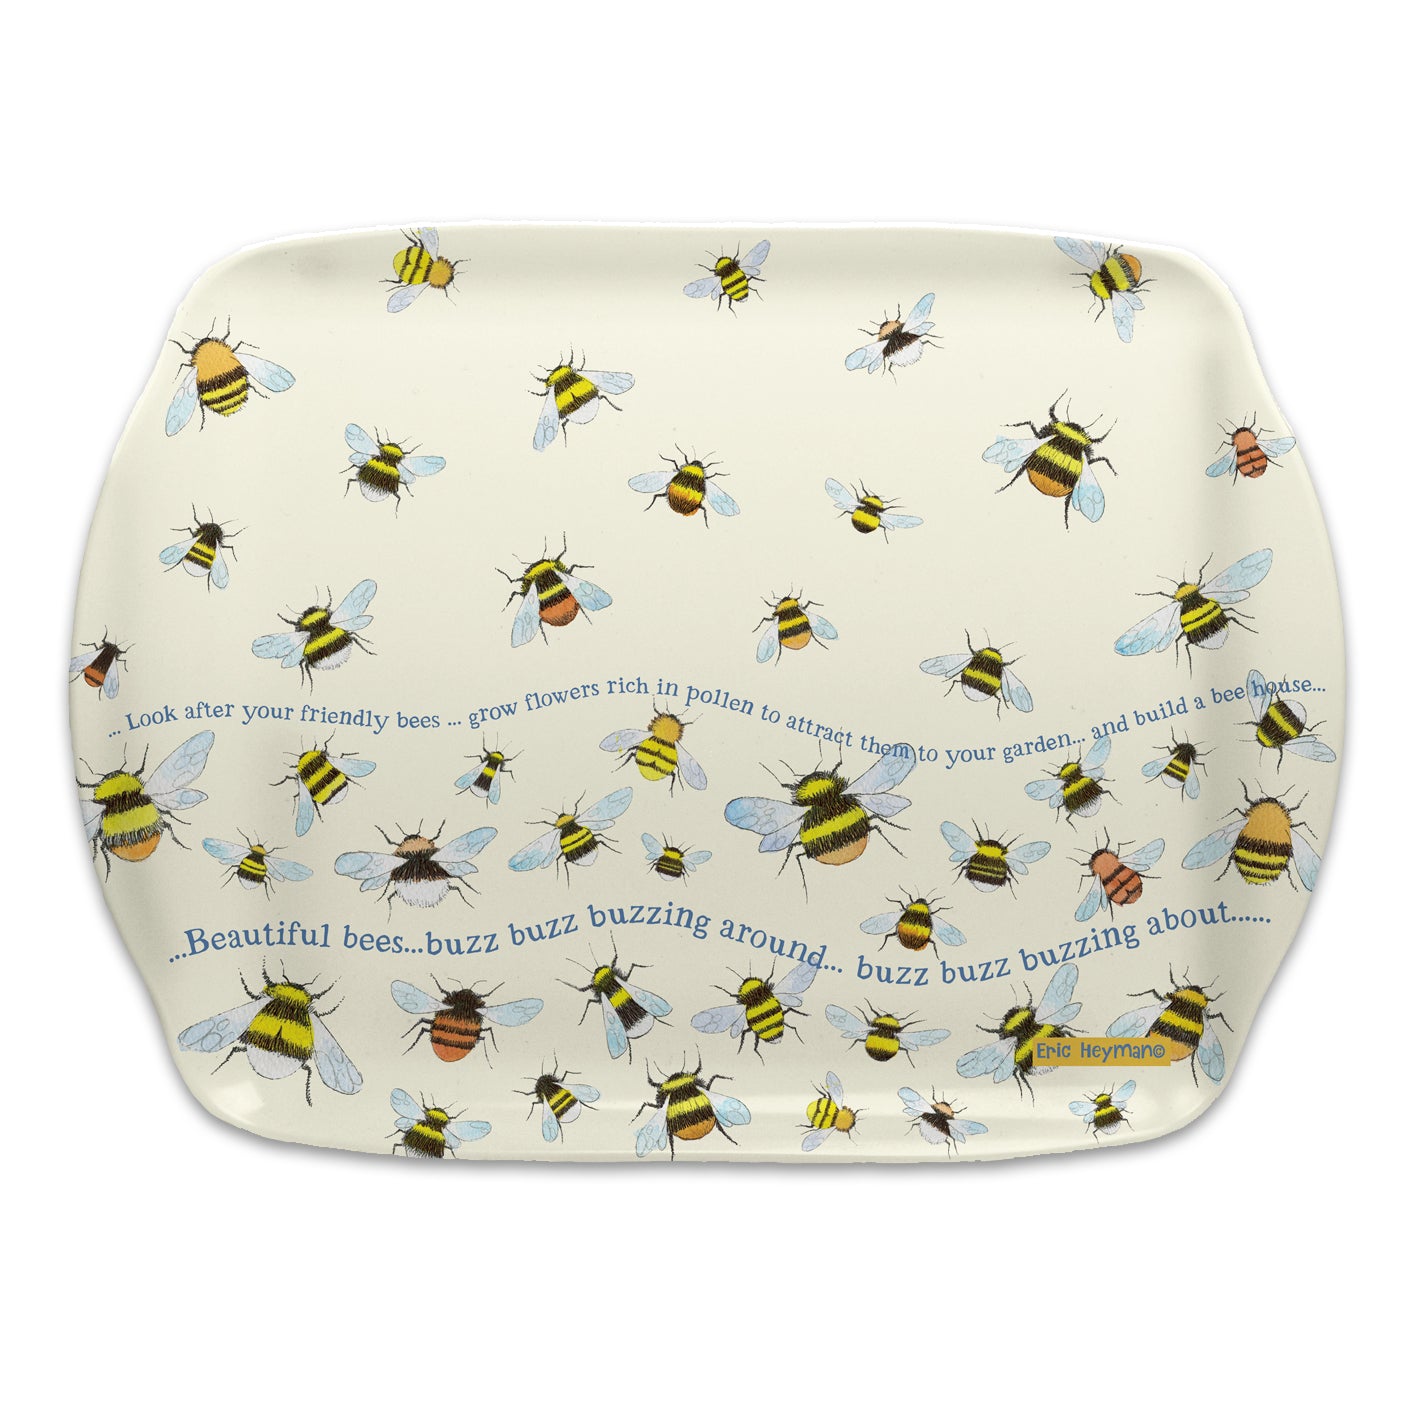 Busy Bee Melamine Tray  by Eric Heyman - Emma Ball - Kate's Cupboard